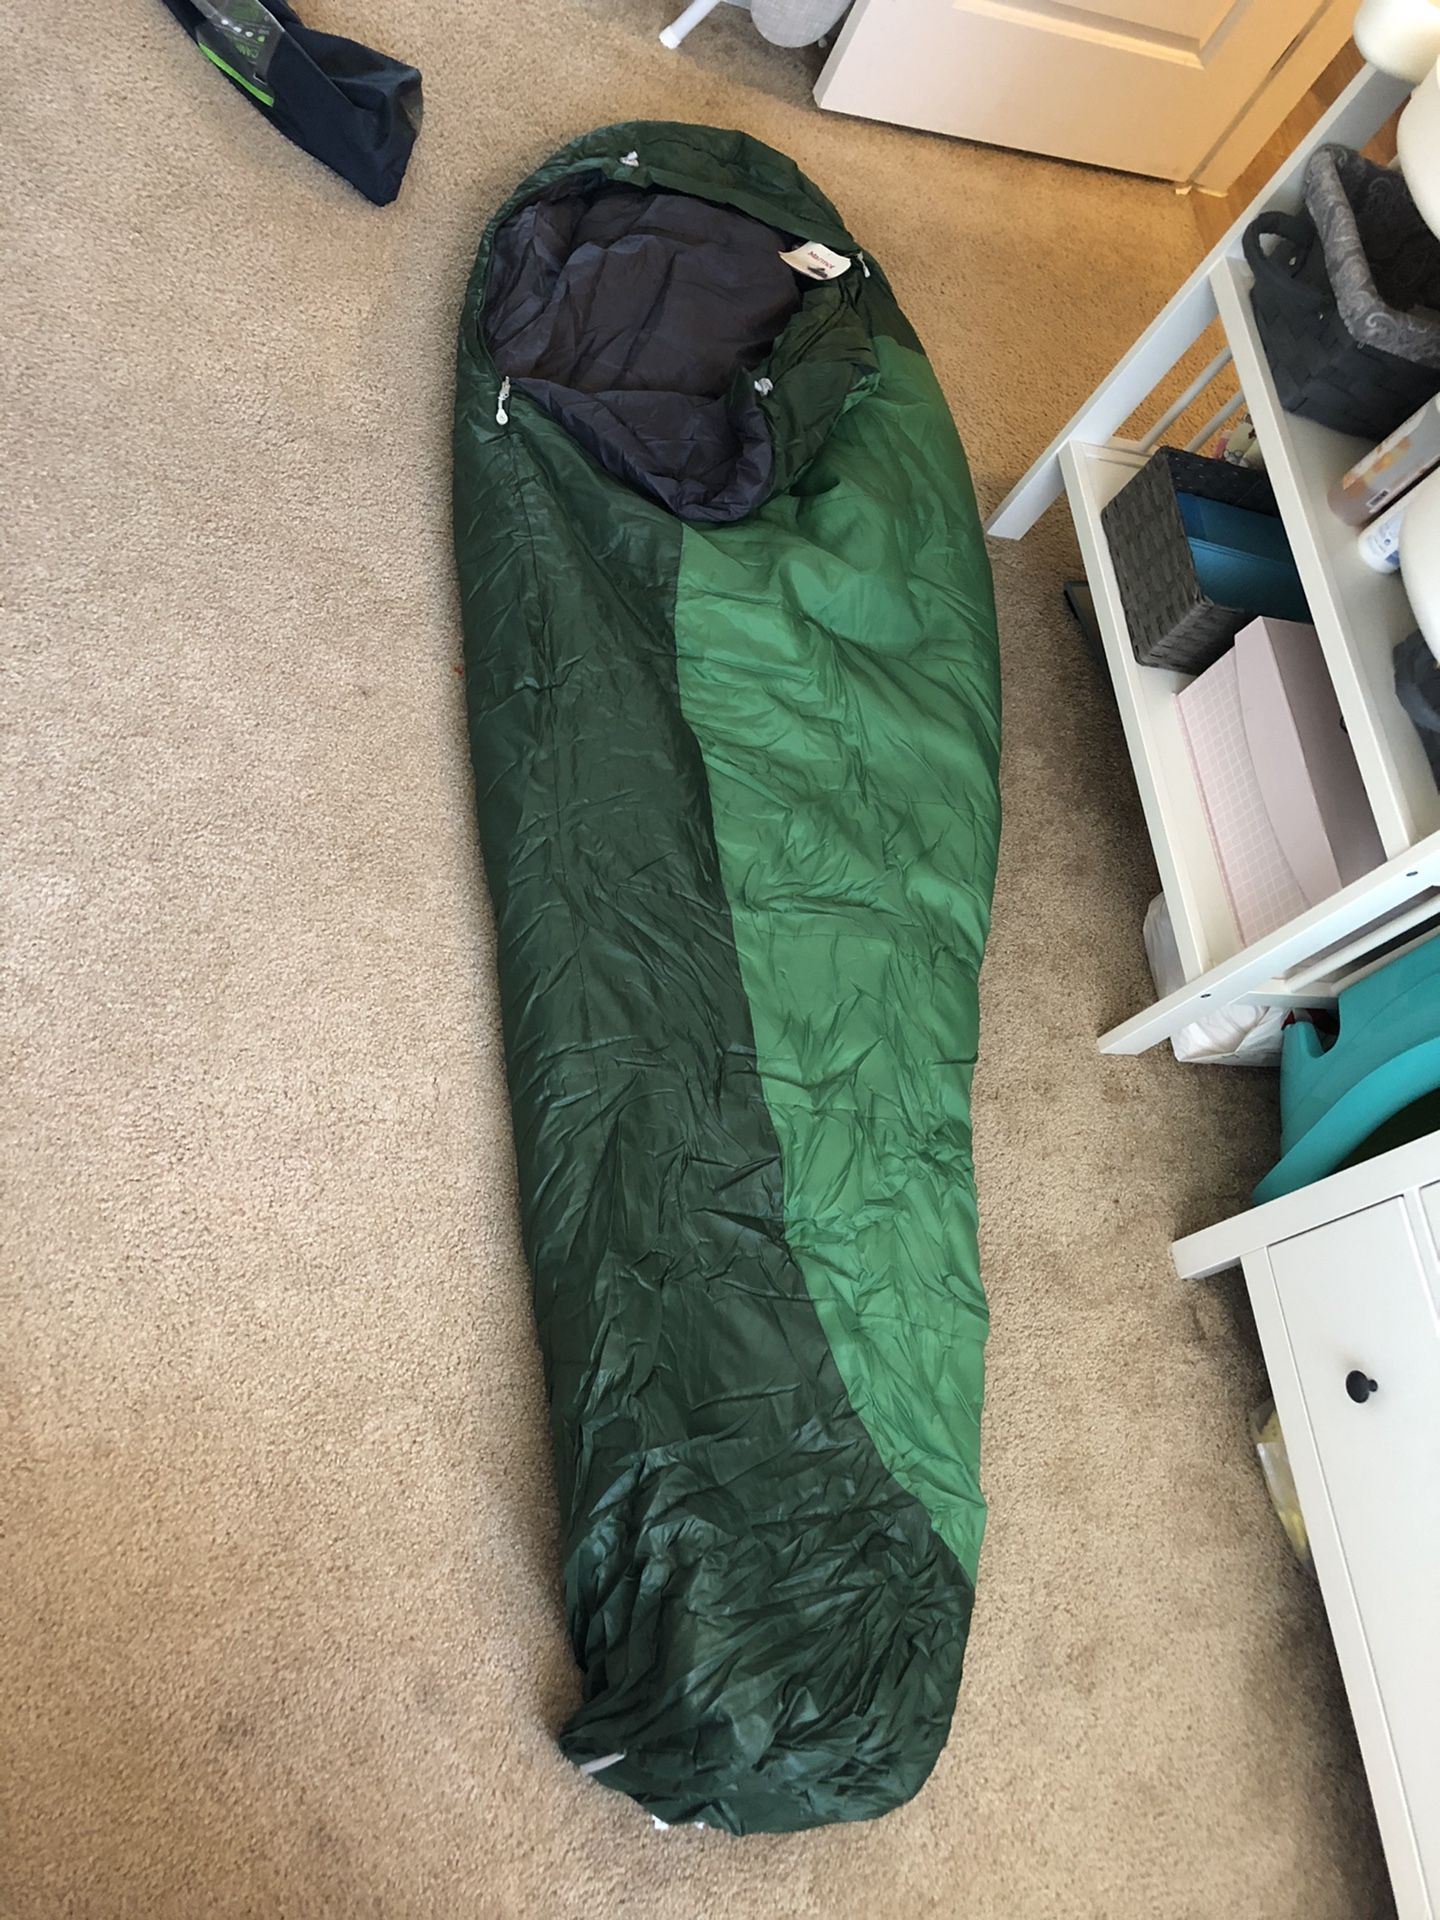 Camp sleeping bag